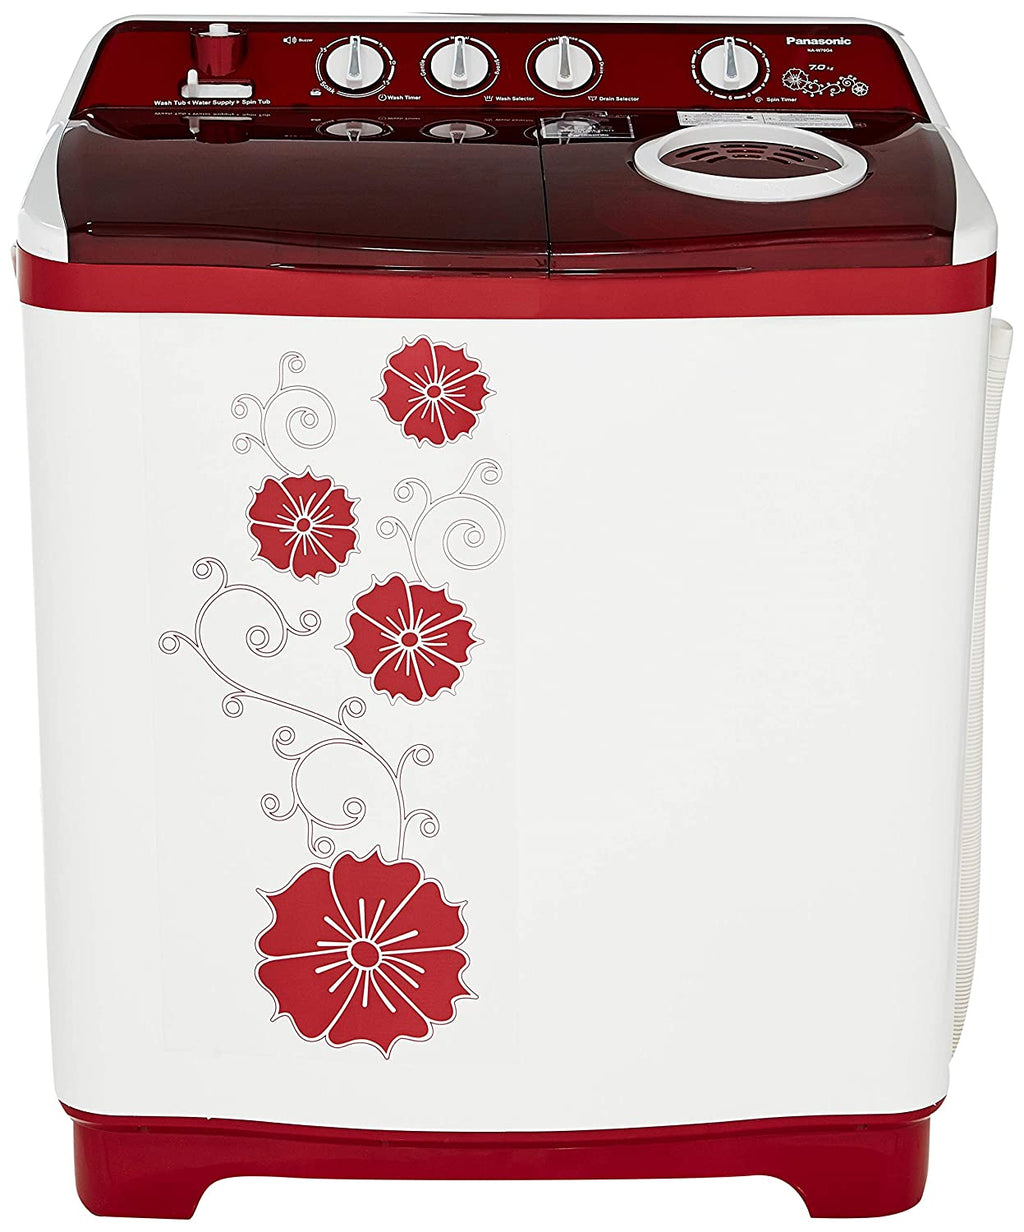 Panasonic 7 Kg Semi-automatic Top Loading Washing Machine Na-w70g4rrb Red